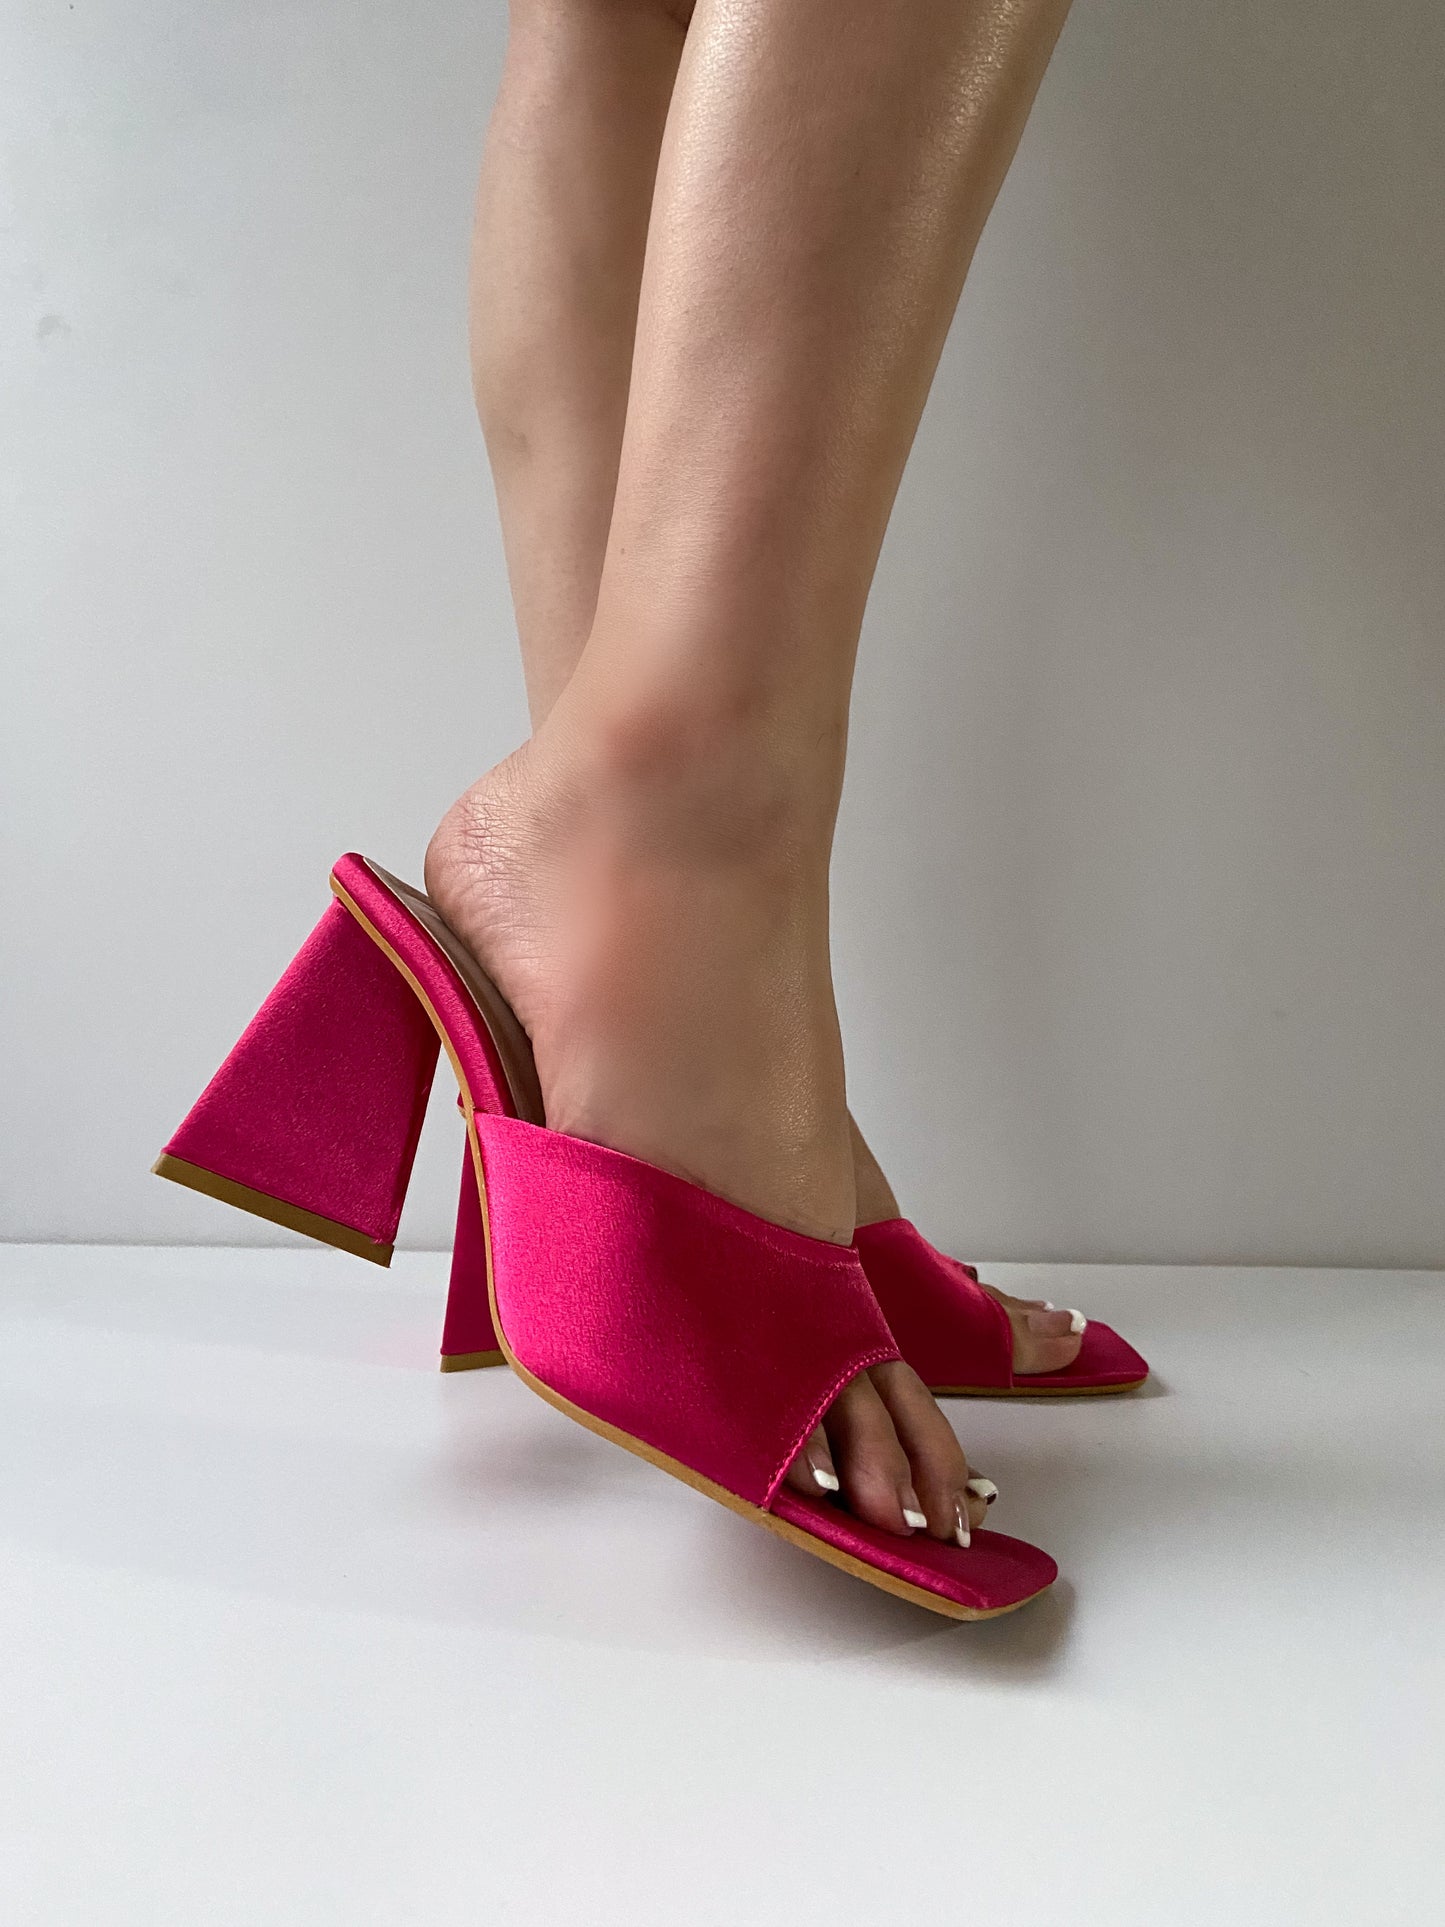 Hot Pink Satin Trending Triangle  Mule Heels